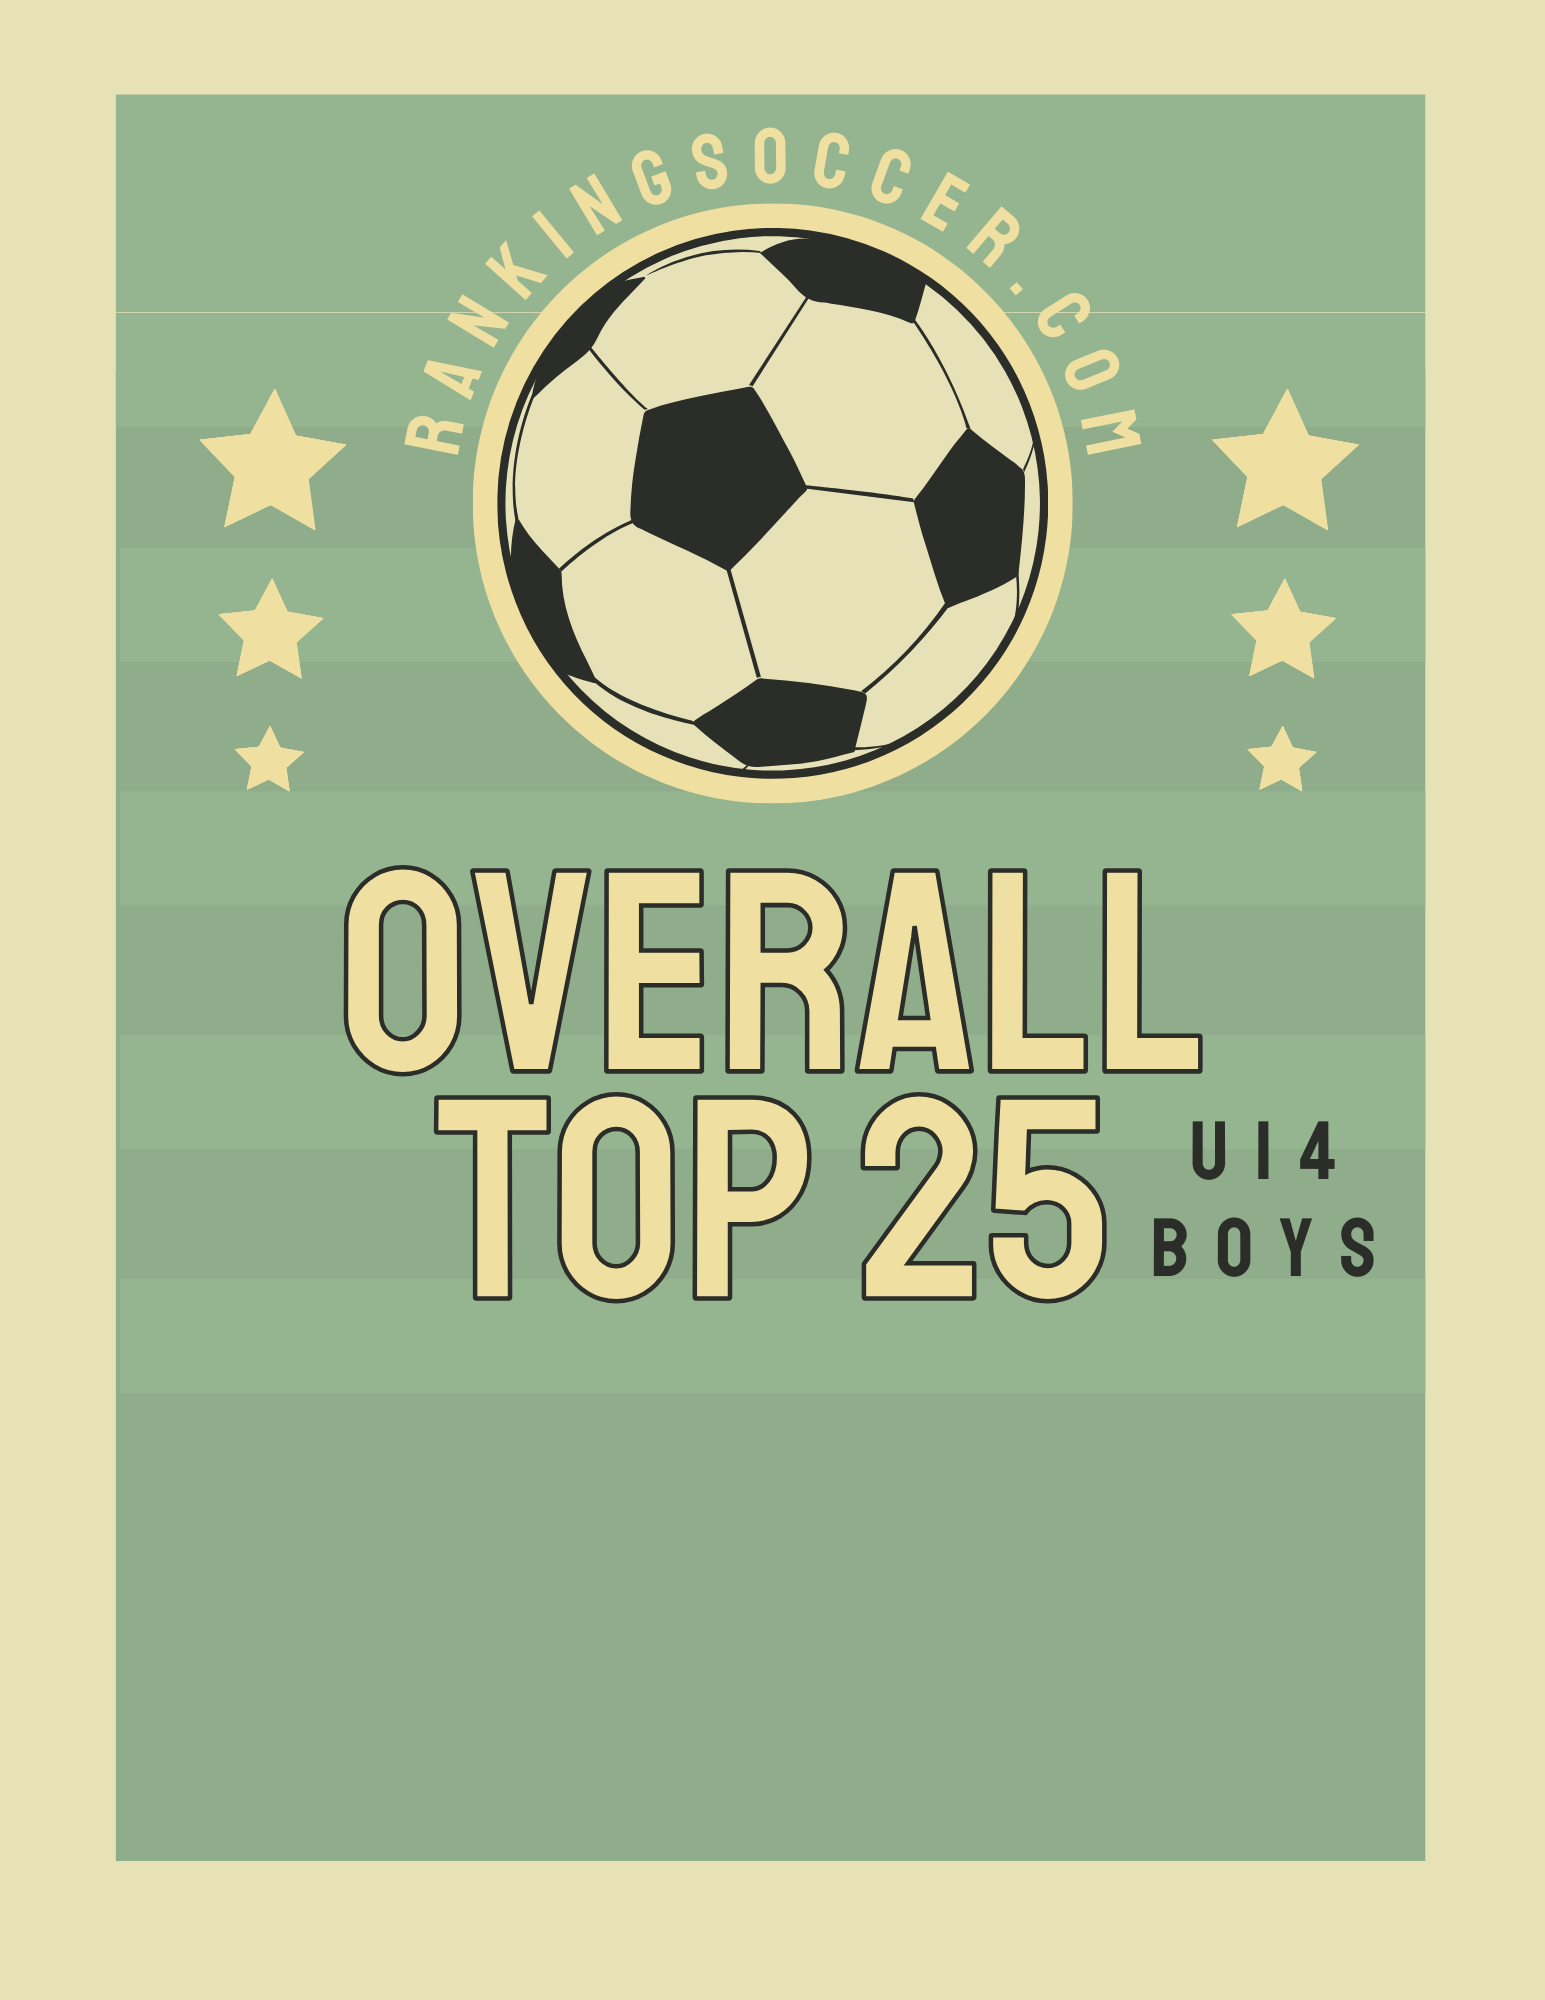 U14 - Overall Top 25 Rankings for Boys Soccer - Week 1 (preseason)